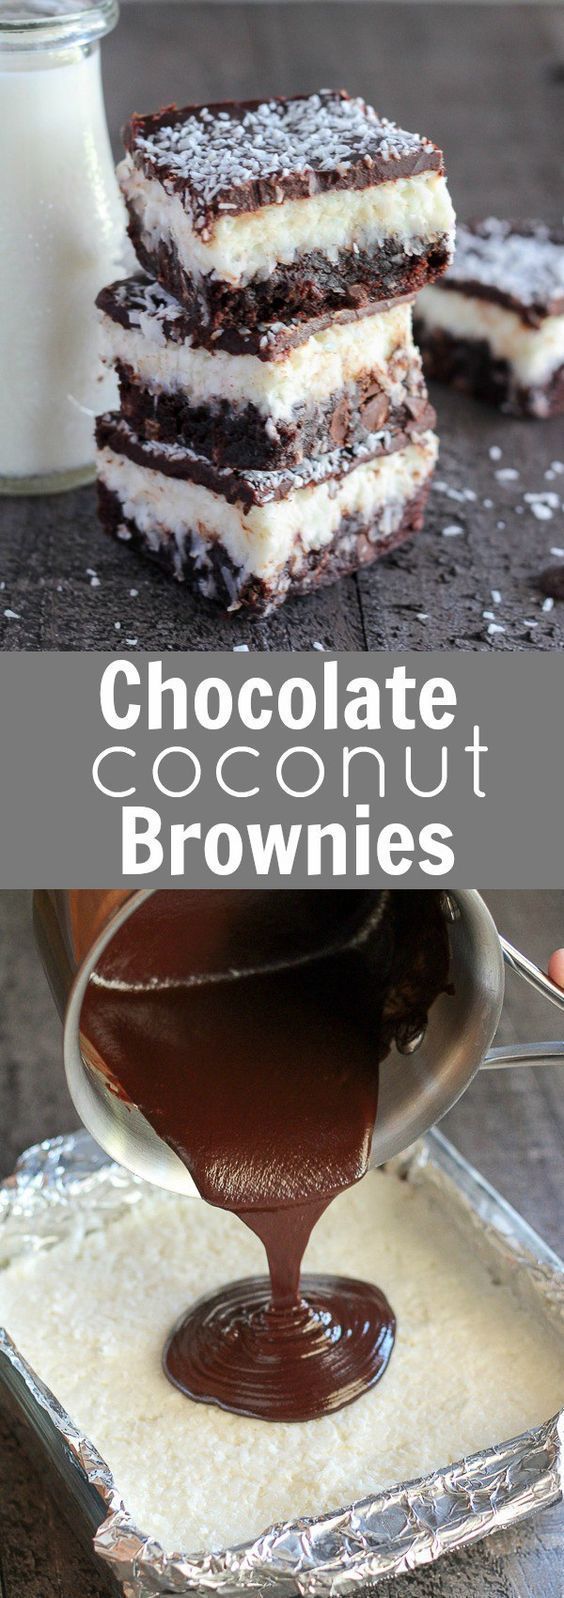 Chocolate Coconut Brownies